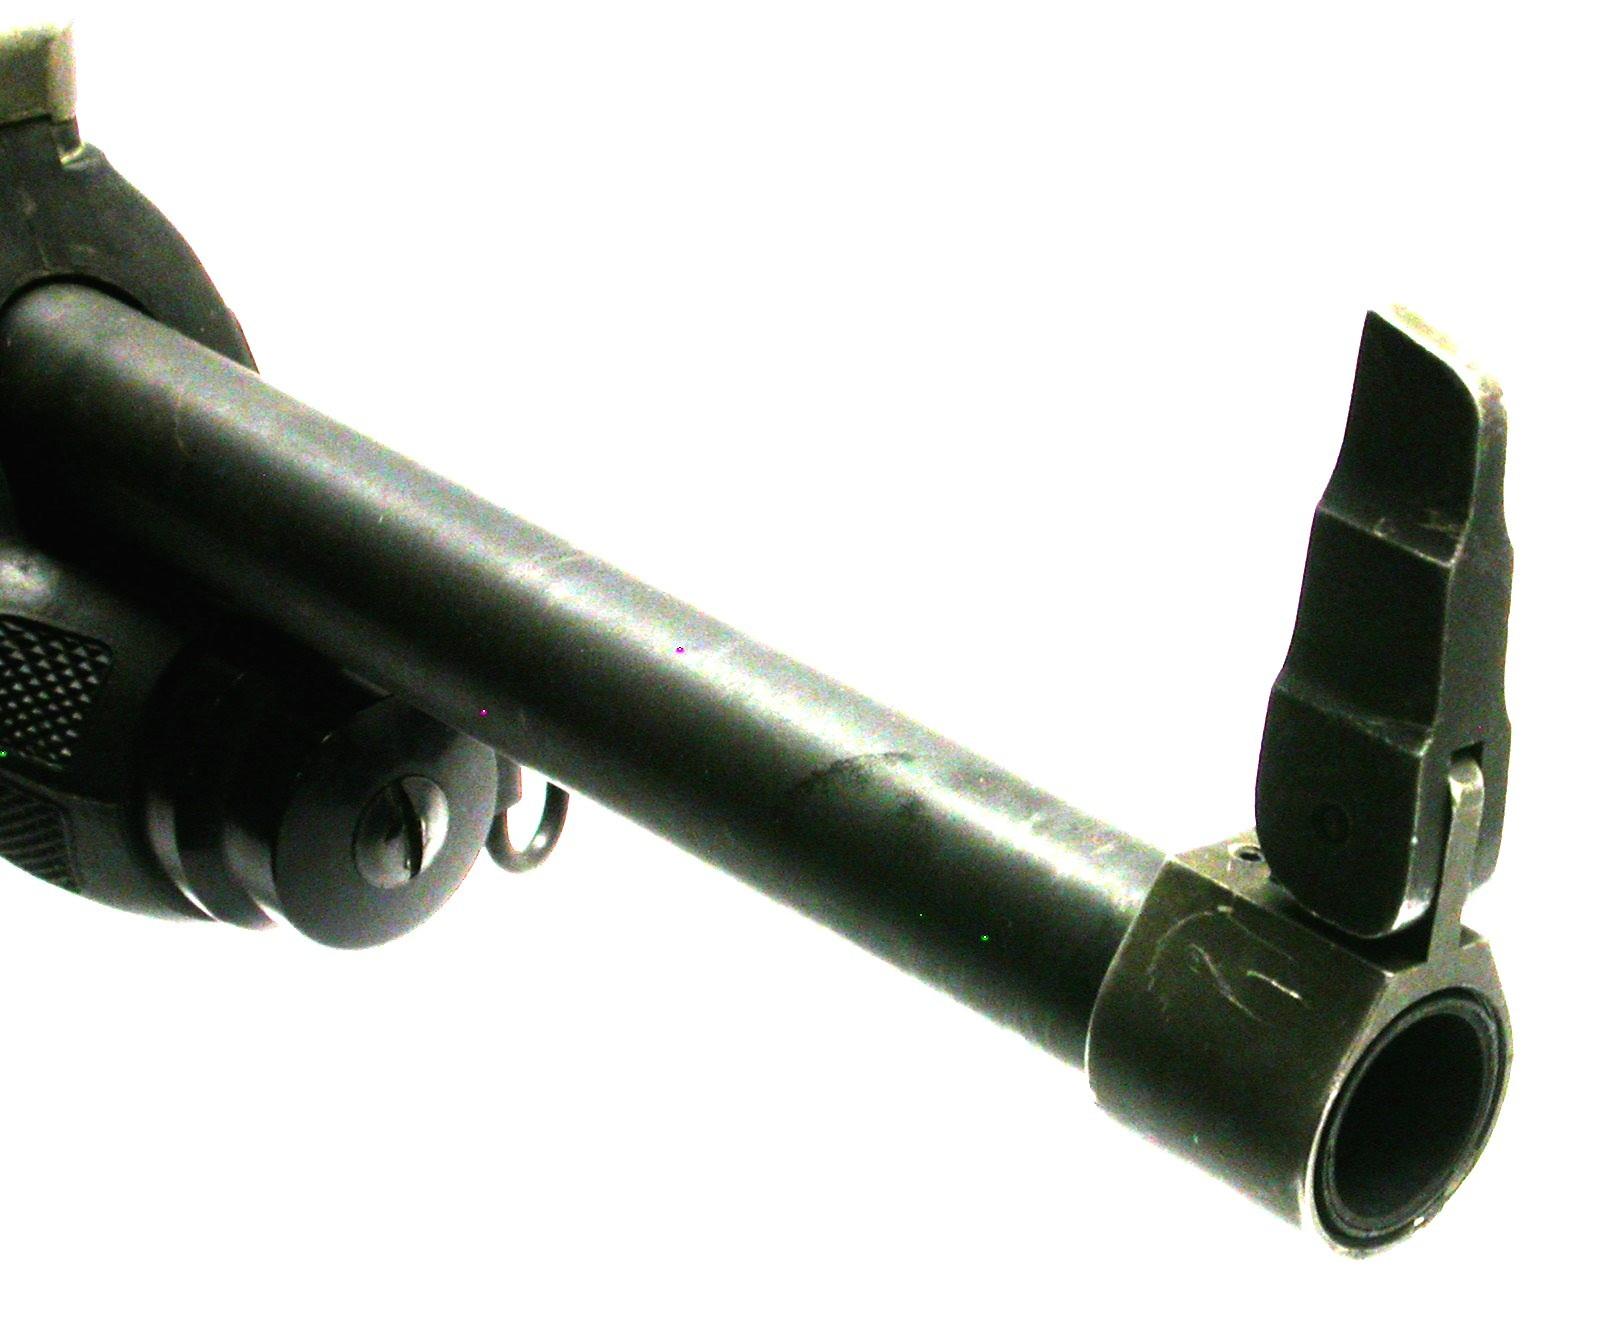 Hi Standard Model 10 Series B 12 Ga Police Semi-Automatic Bullpup Shotgun - FFL #3235732 (CYM)